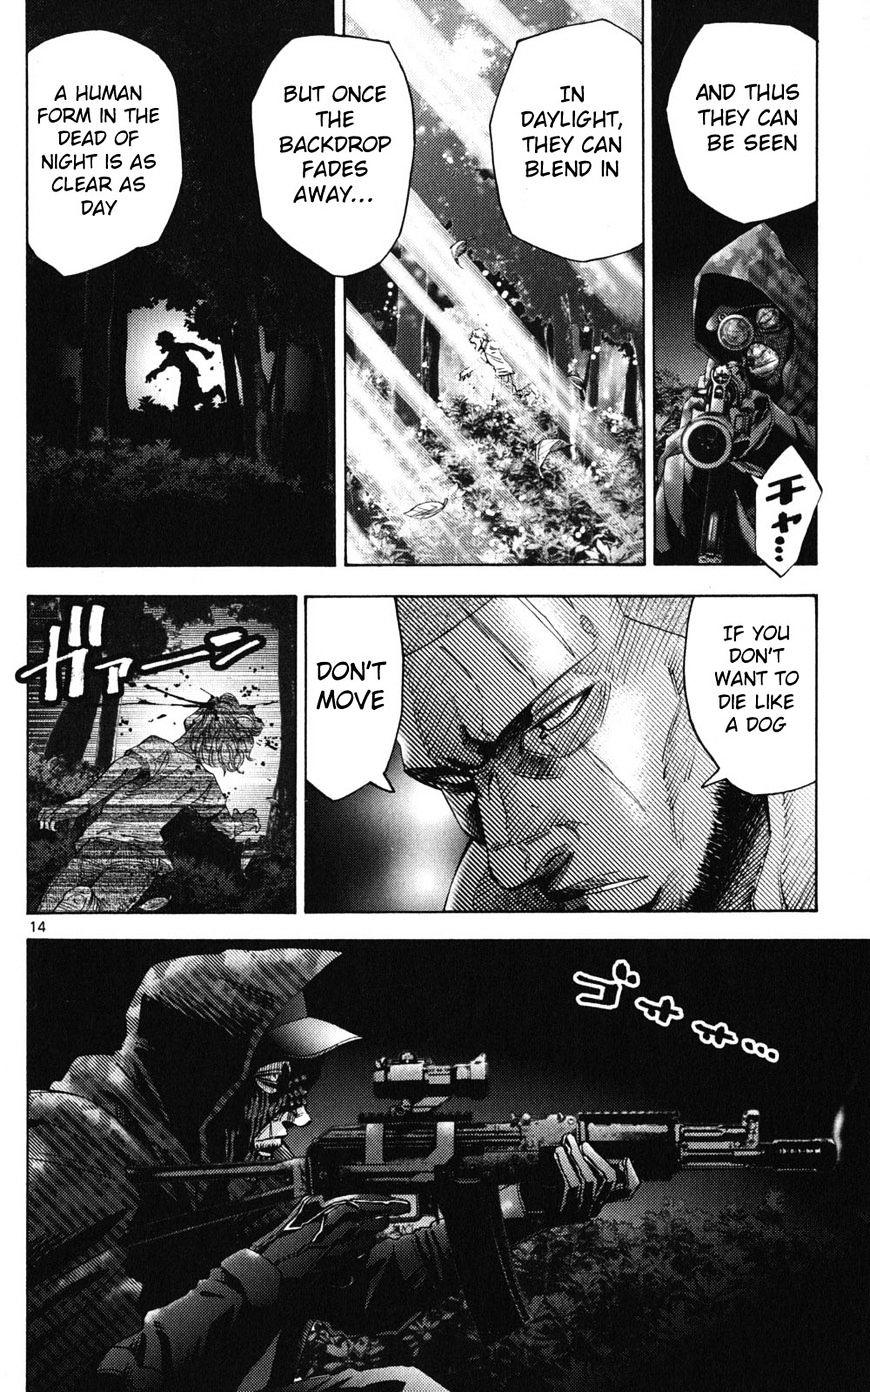 Imawa No Kuni No Alice Chapter 49.2 : Side Story 5 - King Of Spades (2) page 14 - Mangakakalot